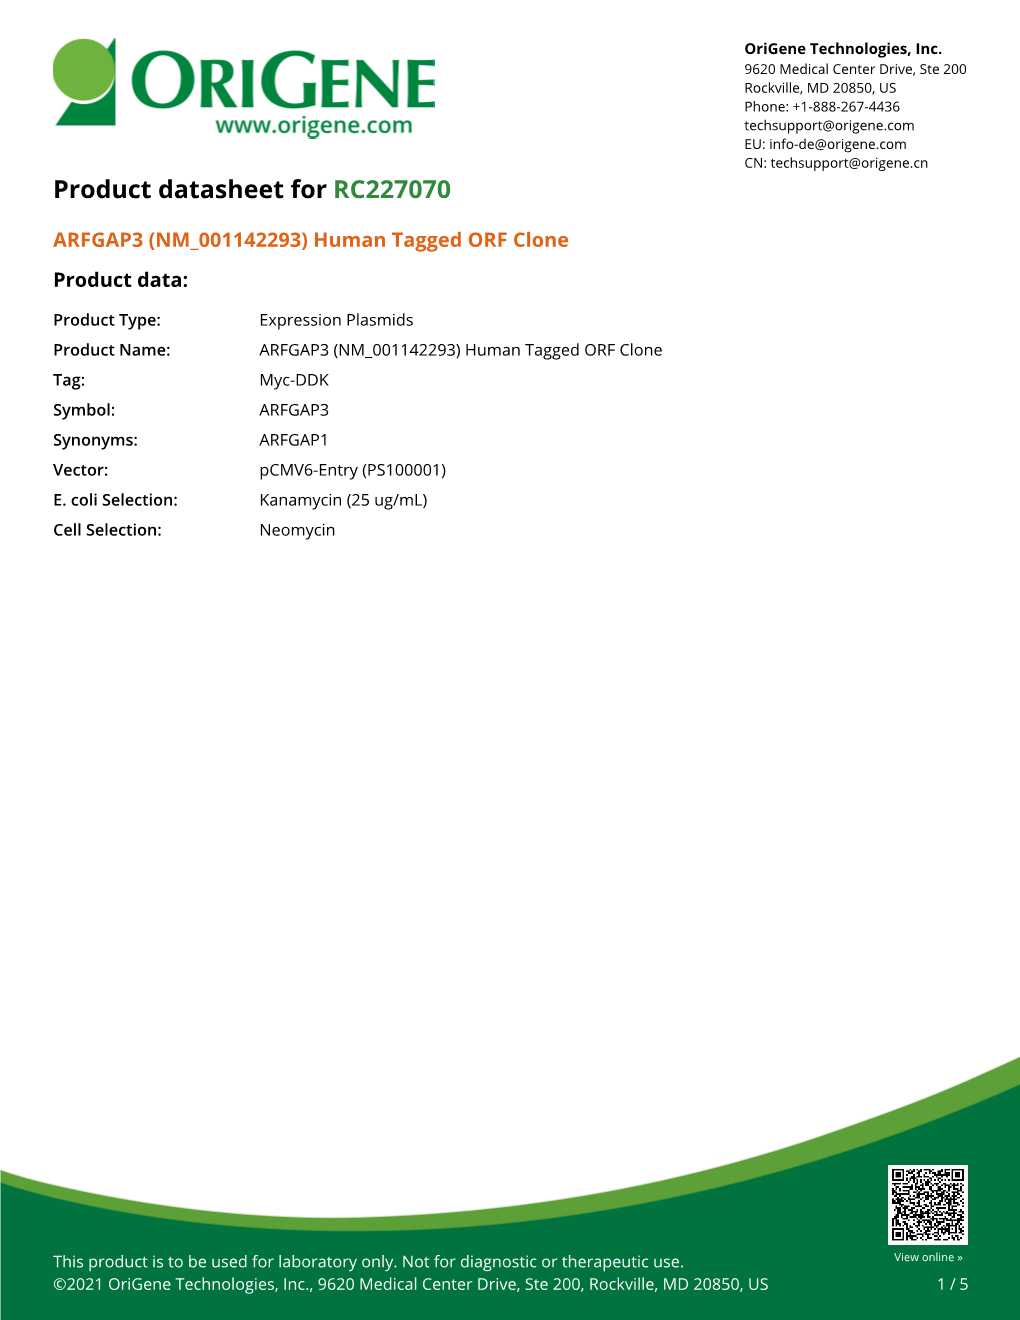 ARFGAP3 (NM 001142293) Human Tagged ORF Clone Product Data